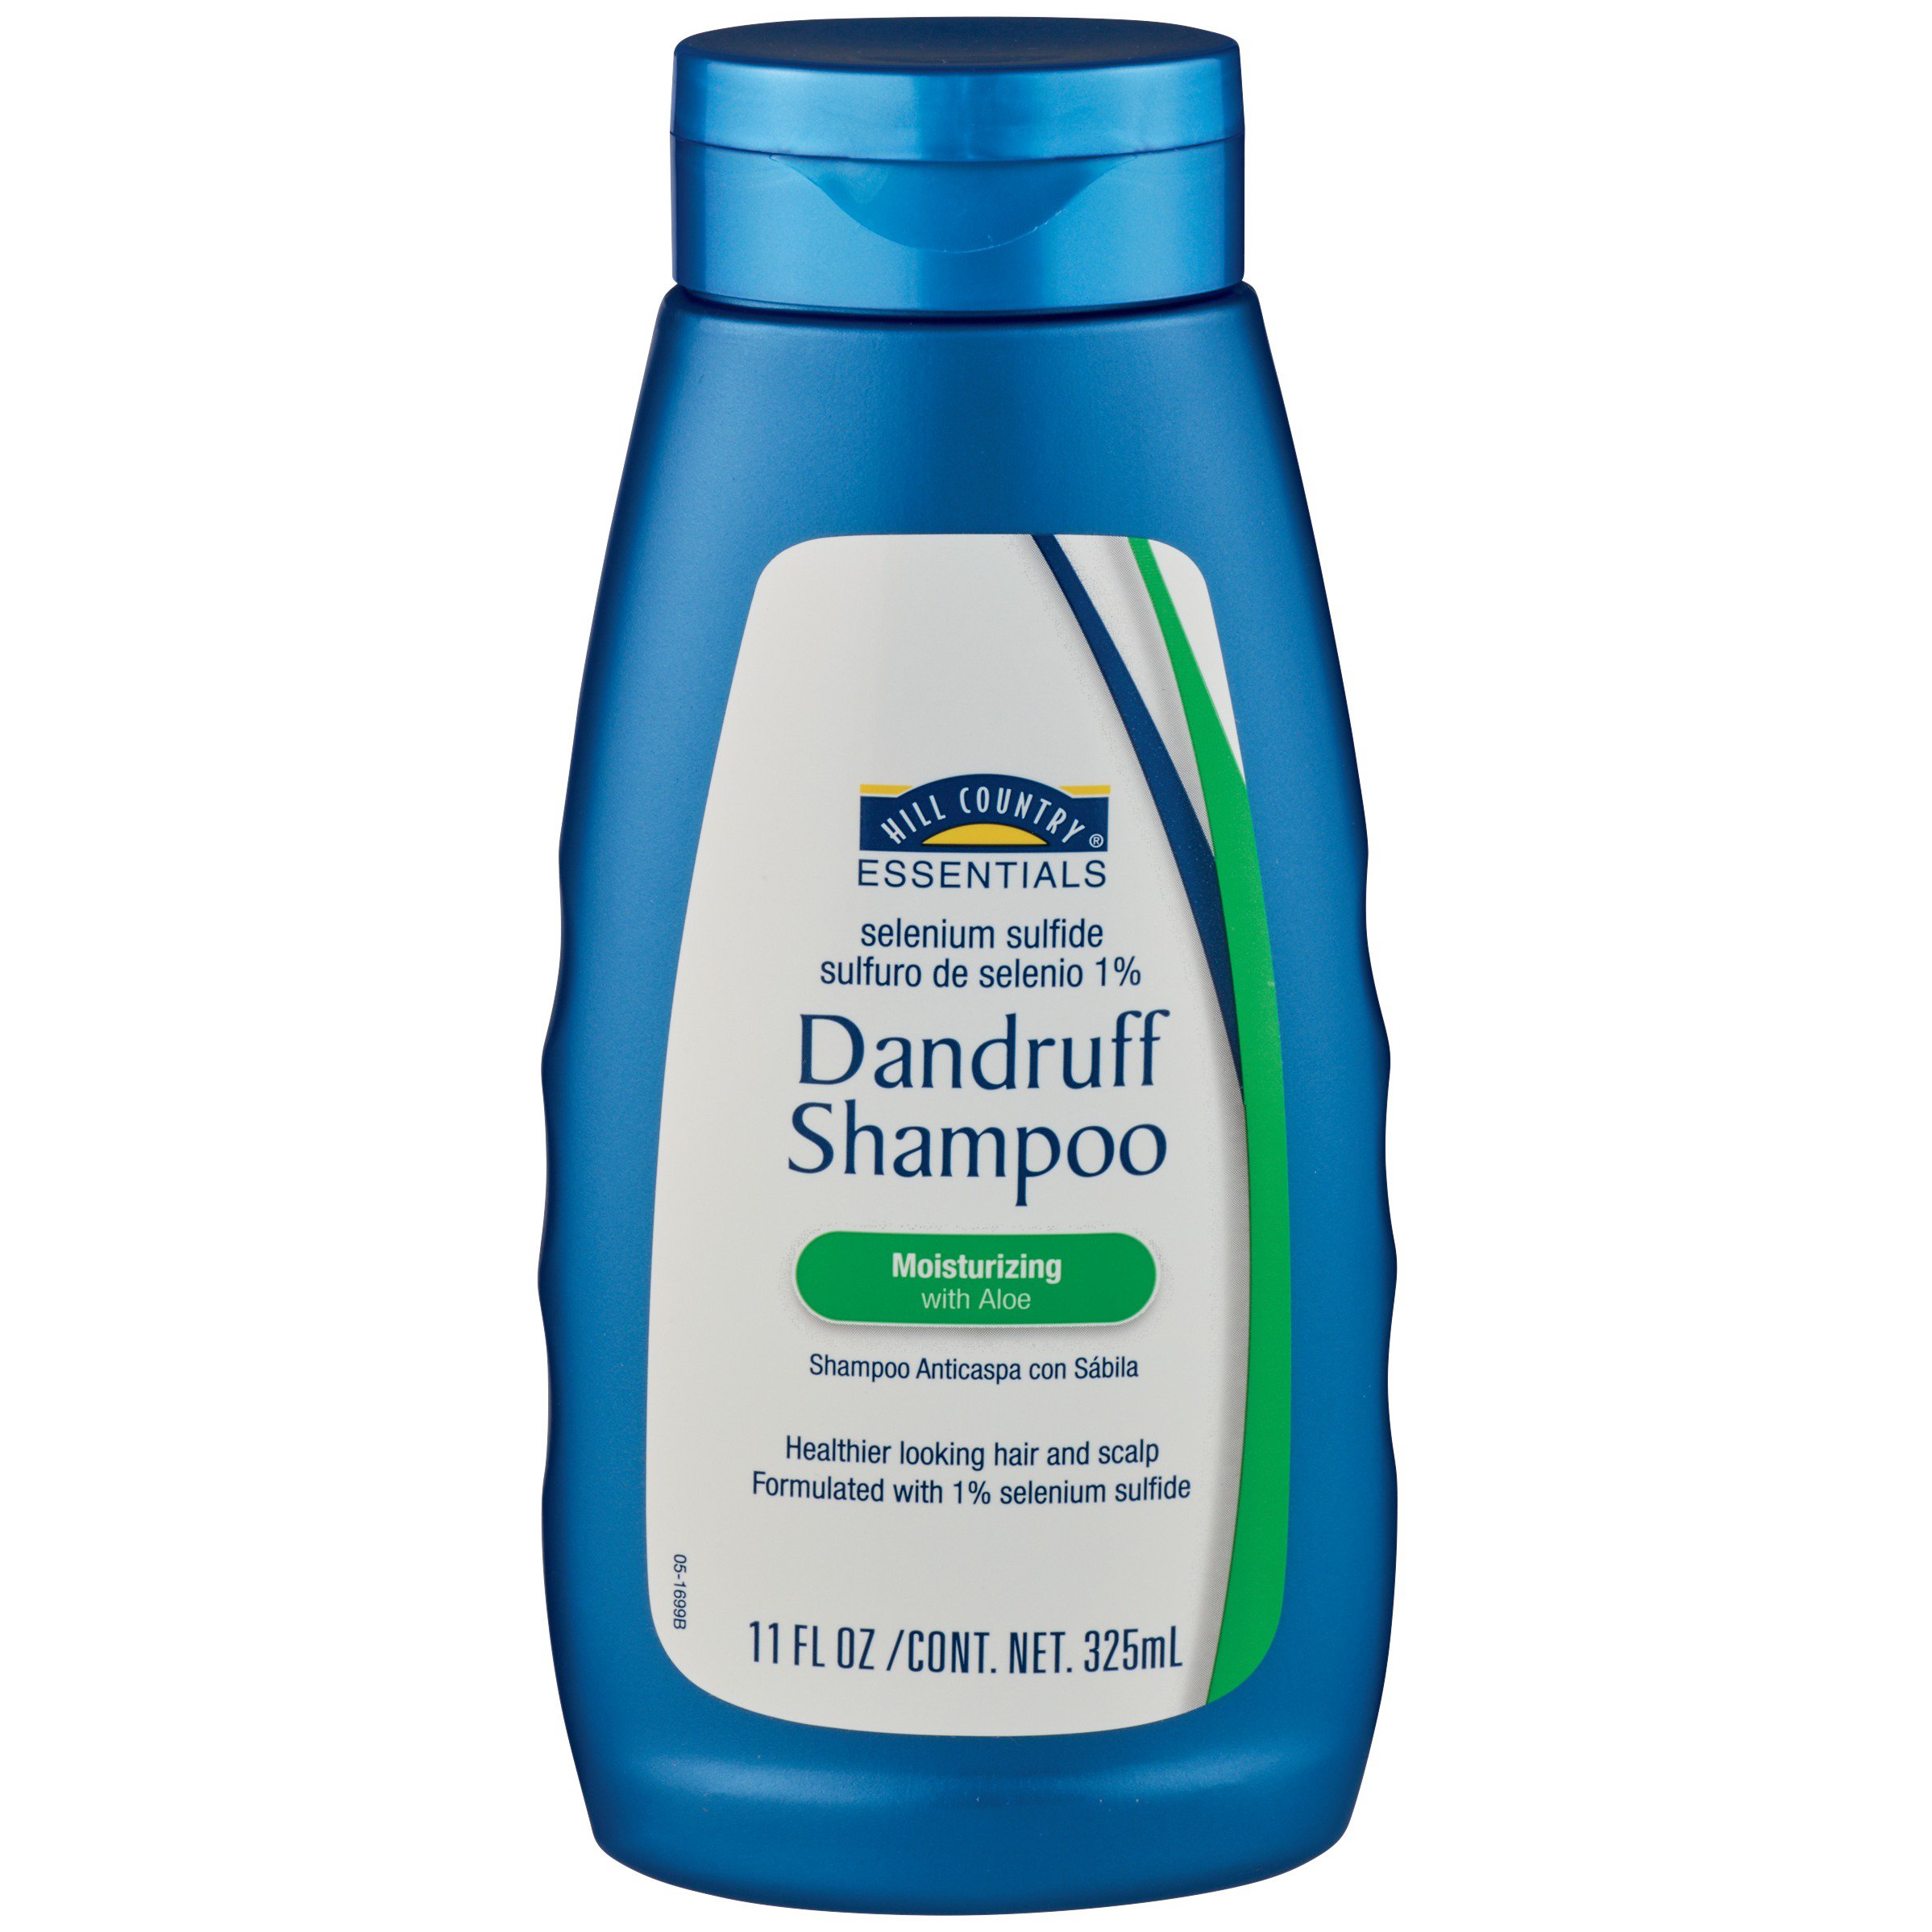 James Dyson Frastødende dansk Hill Country Essentials Dandruff Shampoo Moisturizing Treatment with Aloe -  Shop Shampoo & Conditioner at H-E-B